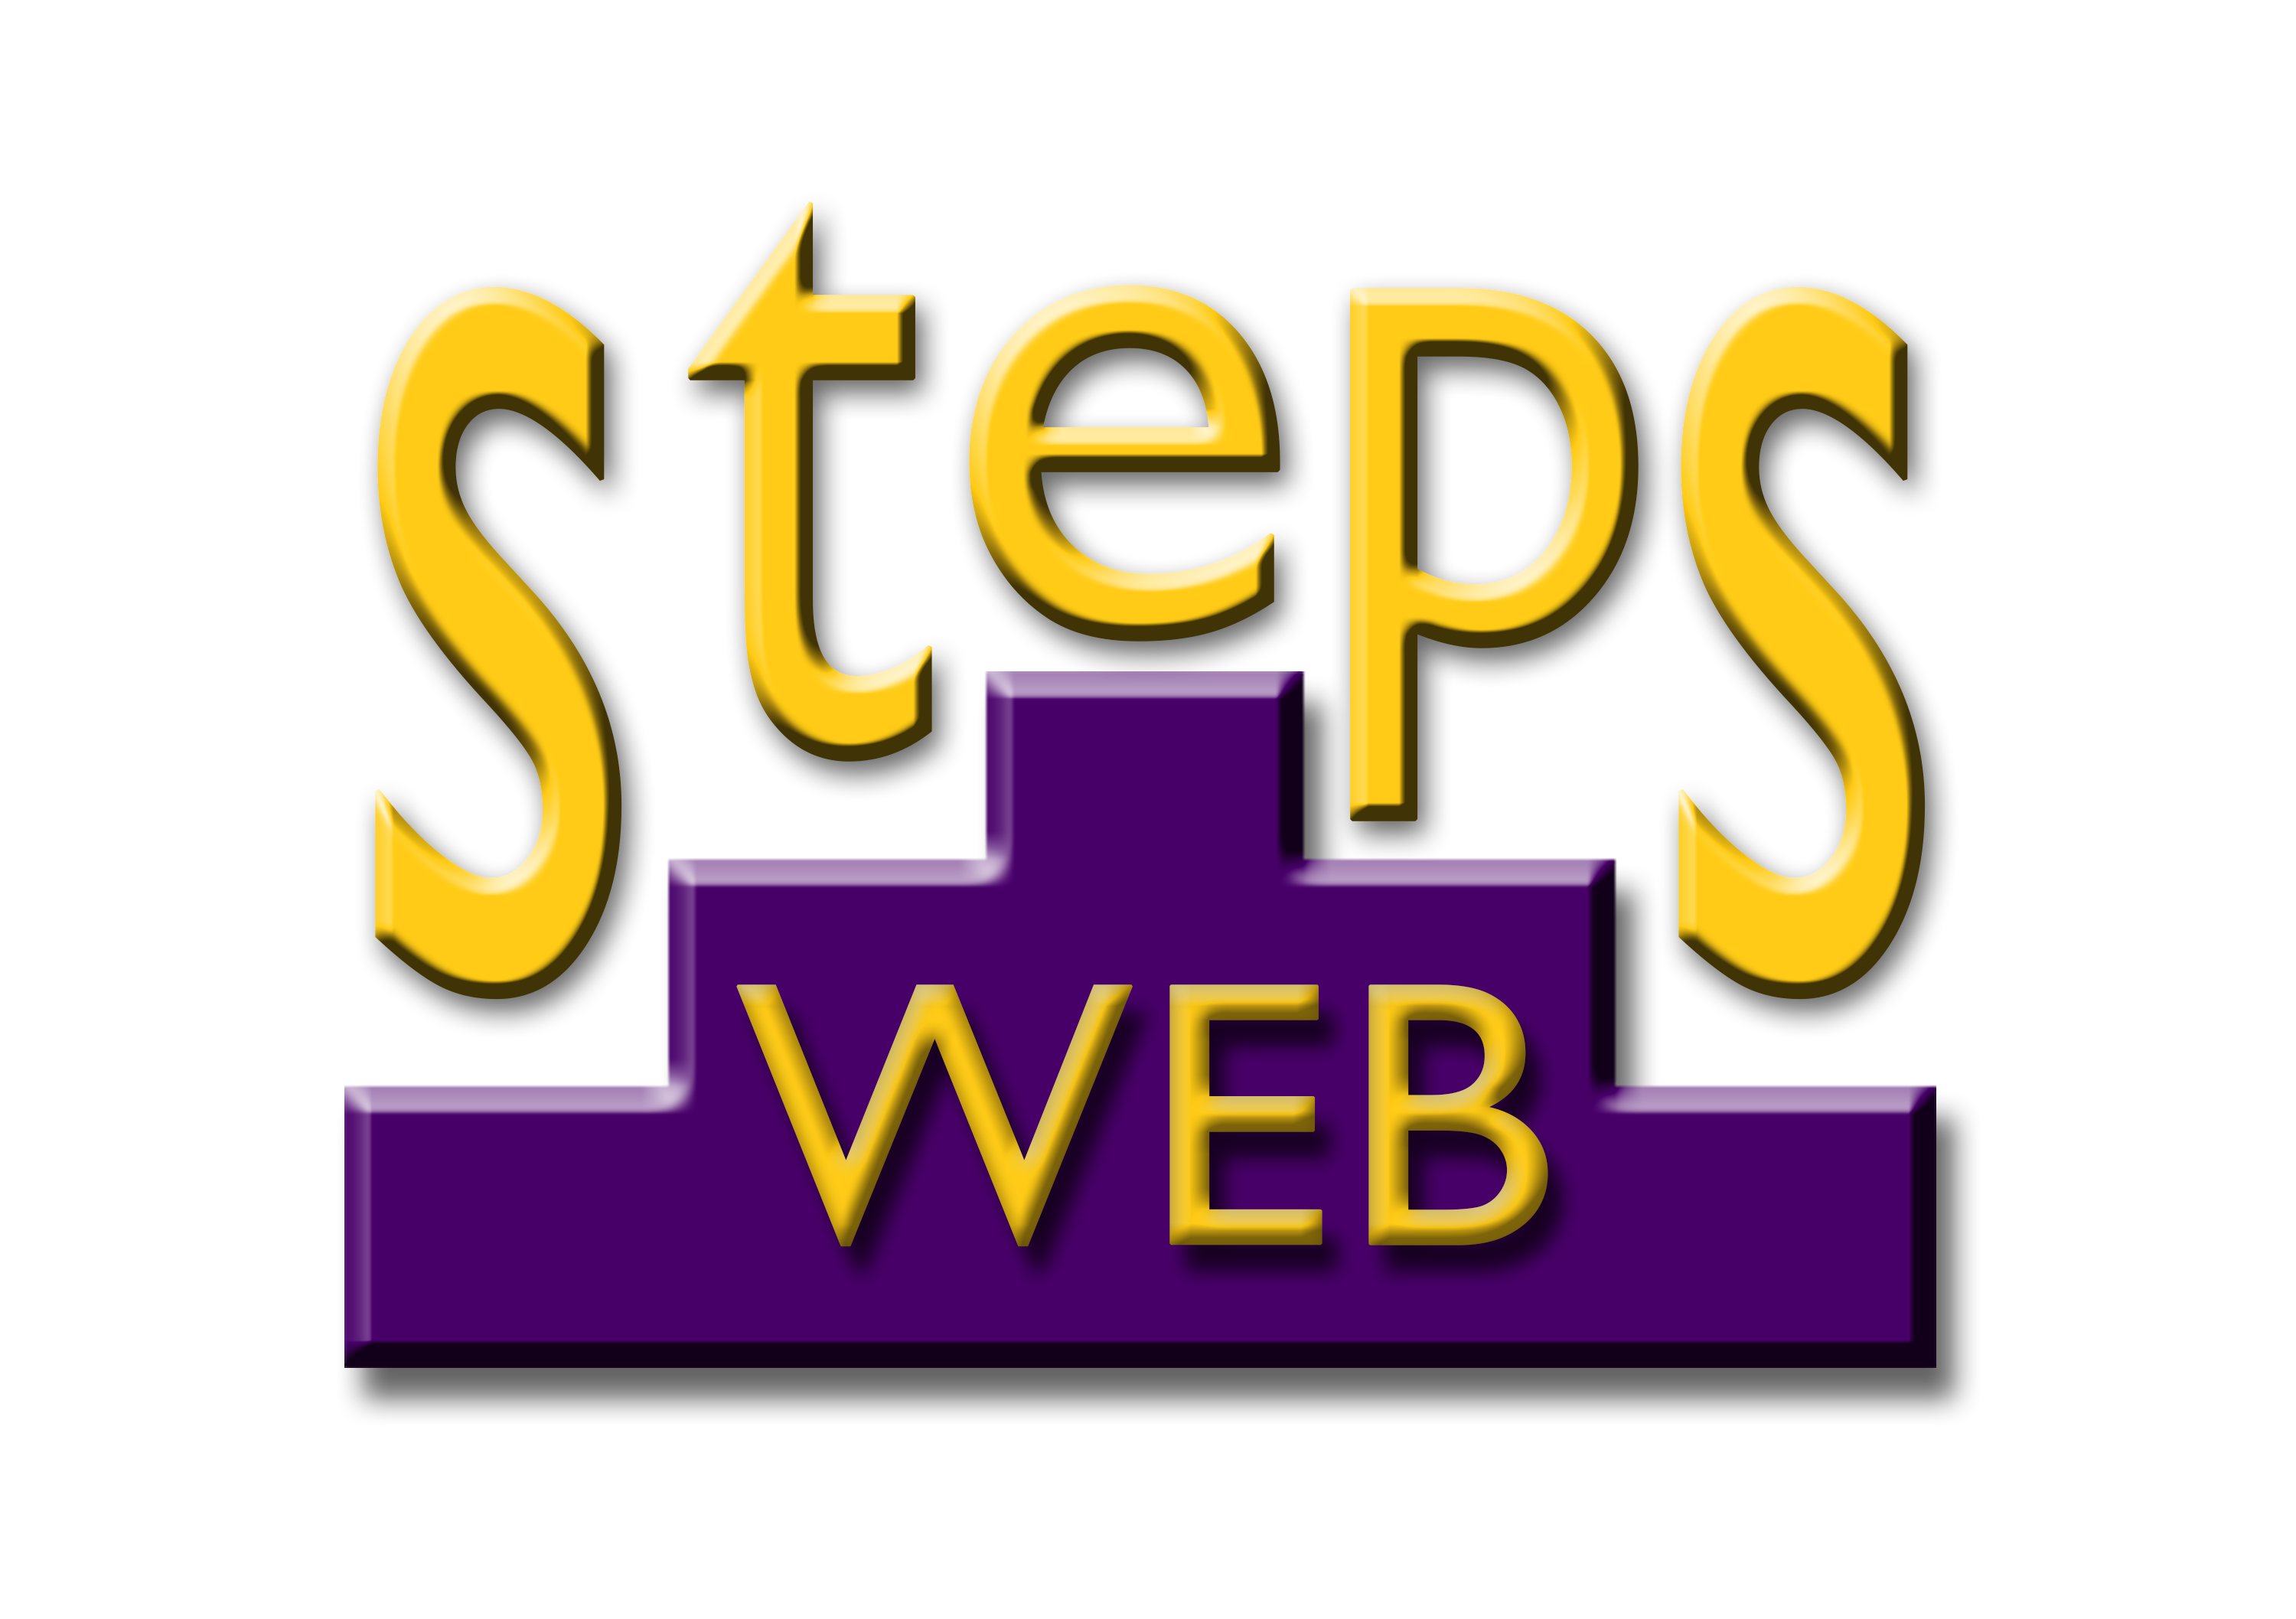 StepsWeb logo